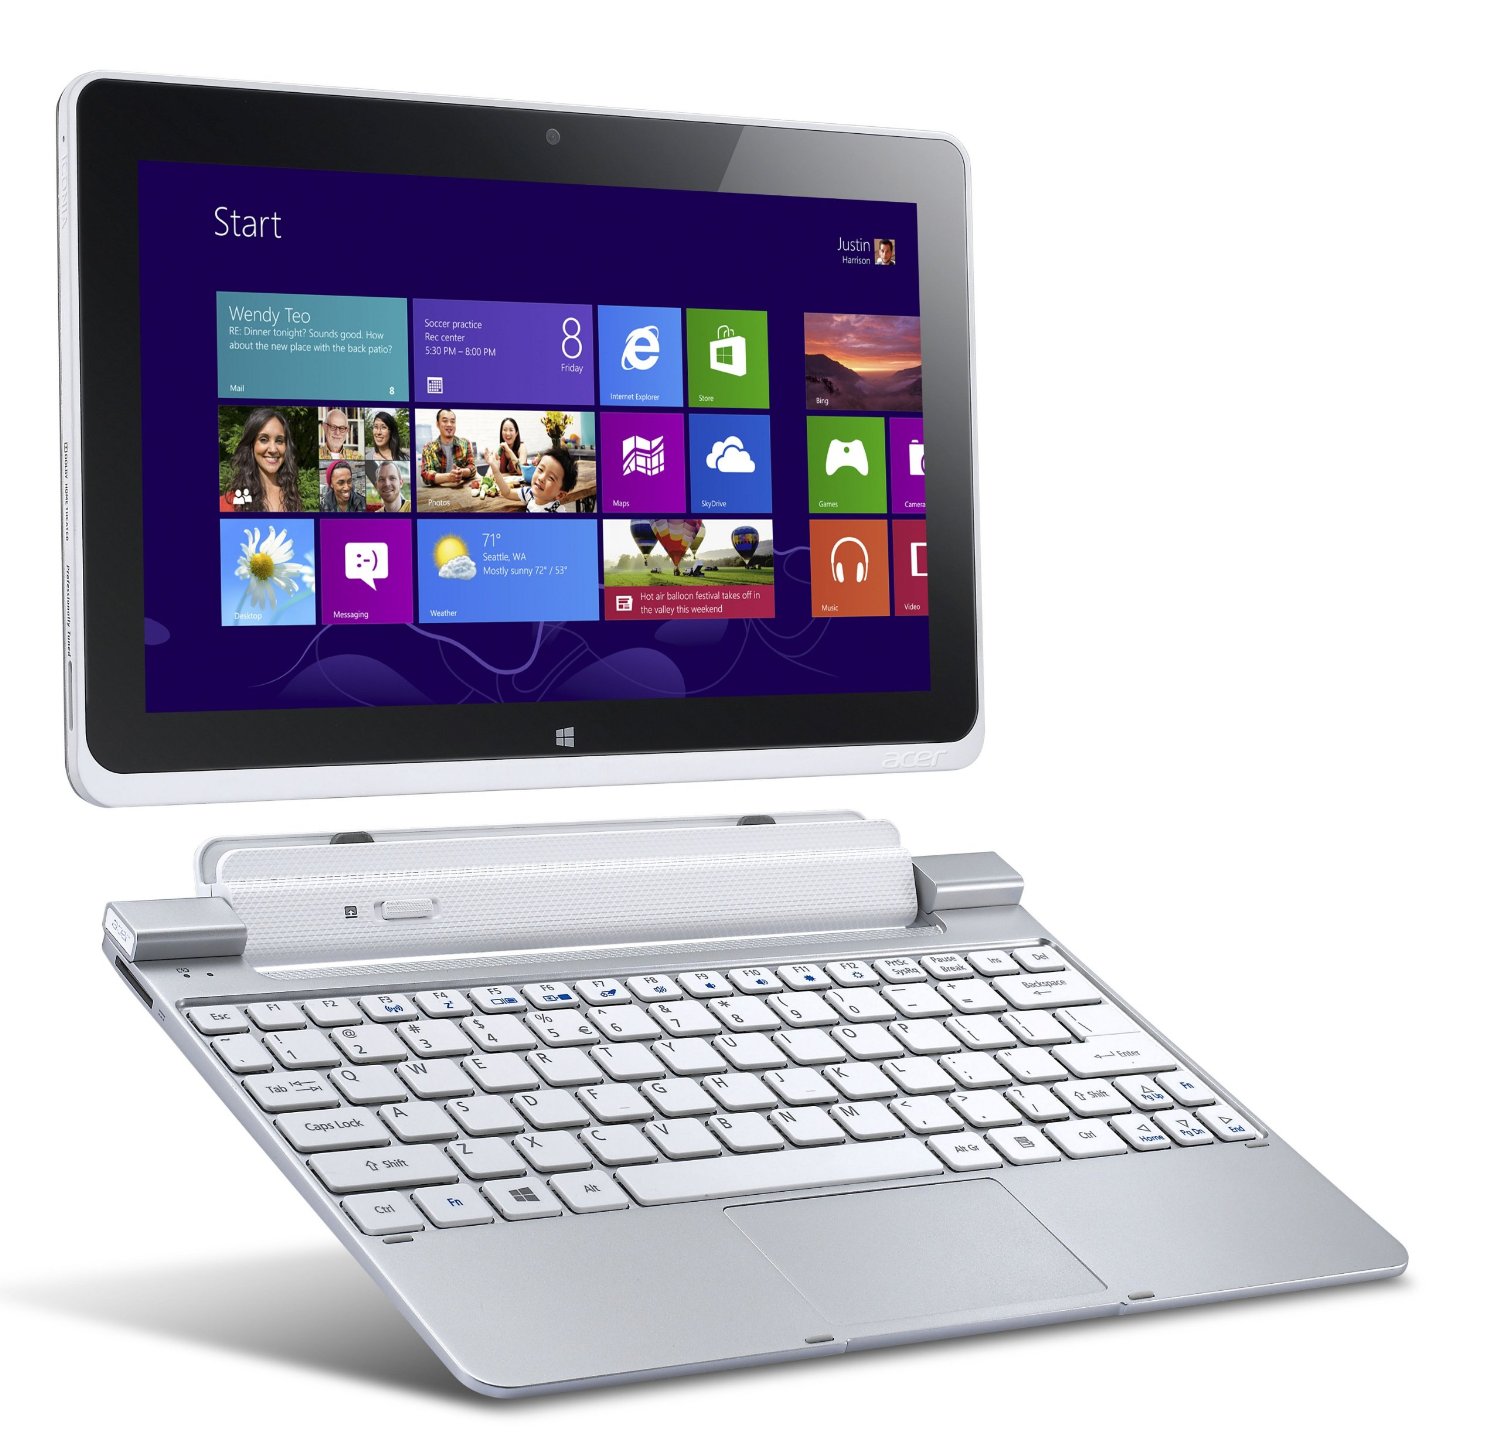 Acer Iconia Tab W510-27602G03iss - 64GB - WIFI - inkl. Keyboard Dock |  LapStore.de